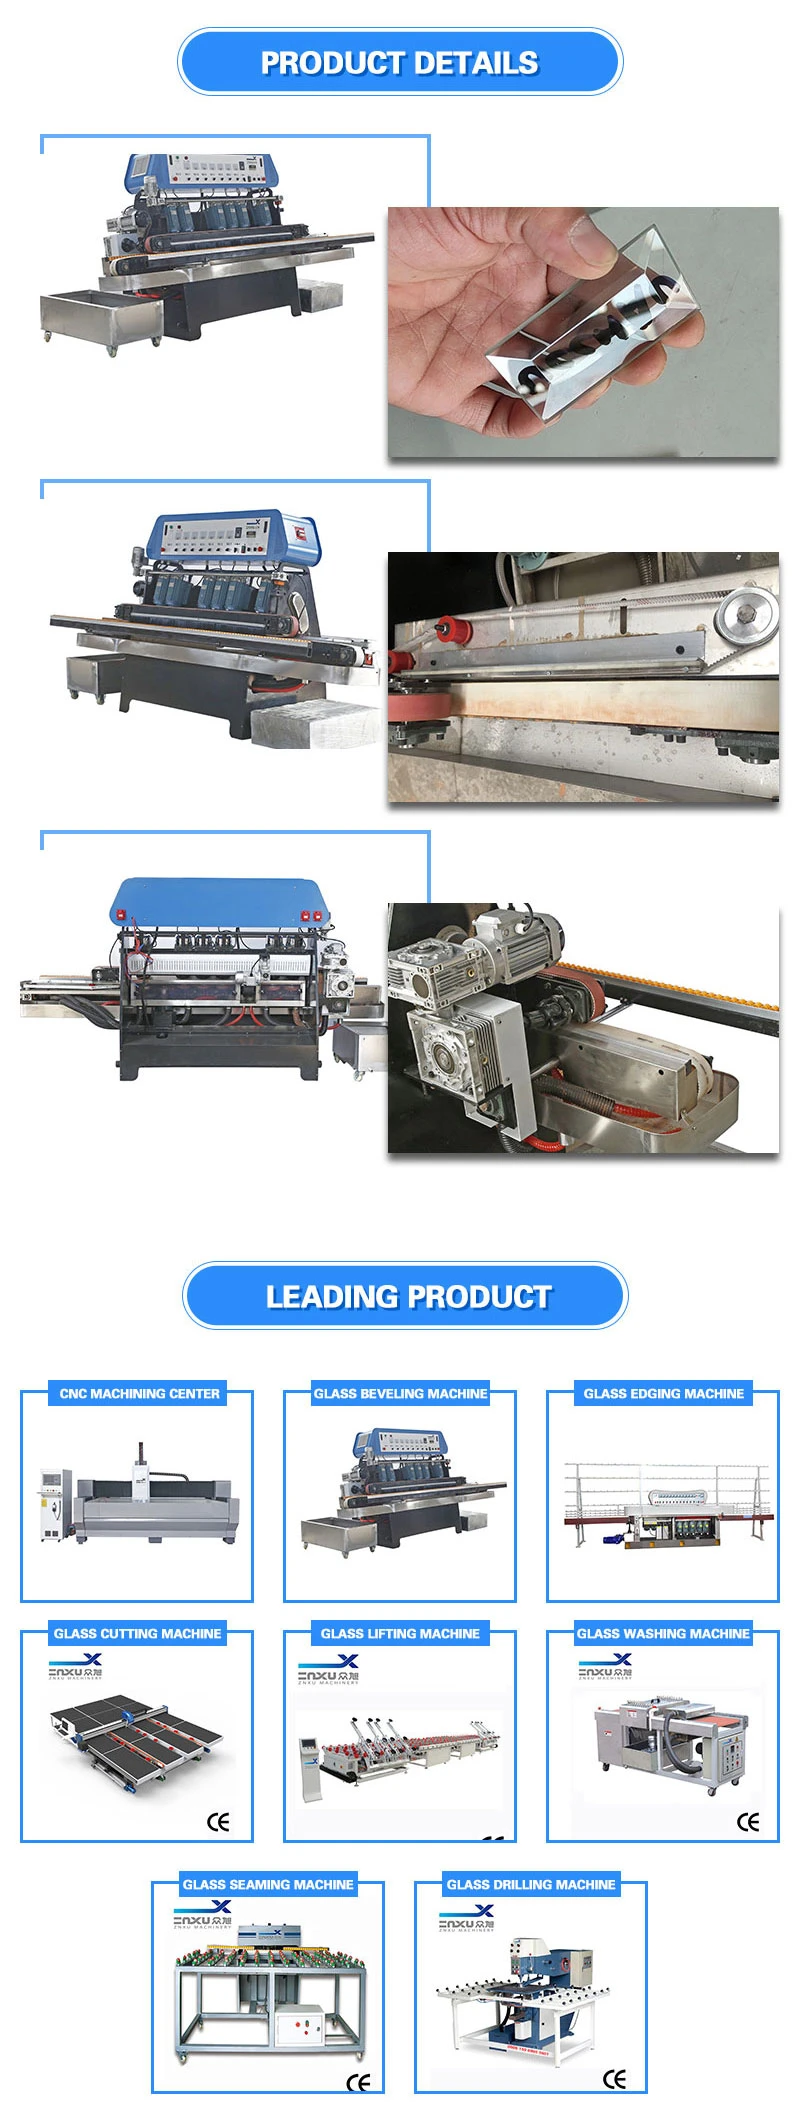 China-Made Grinding and Polishing Glass Machinery